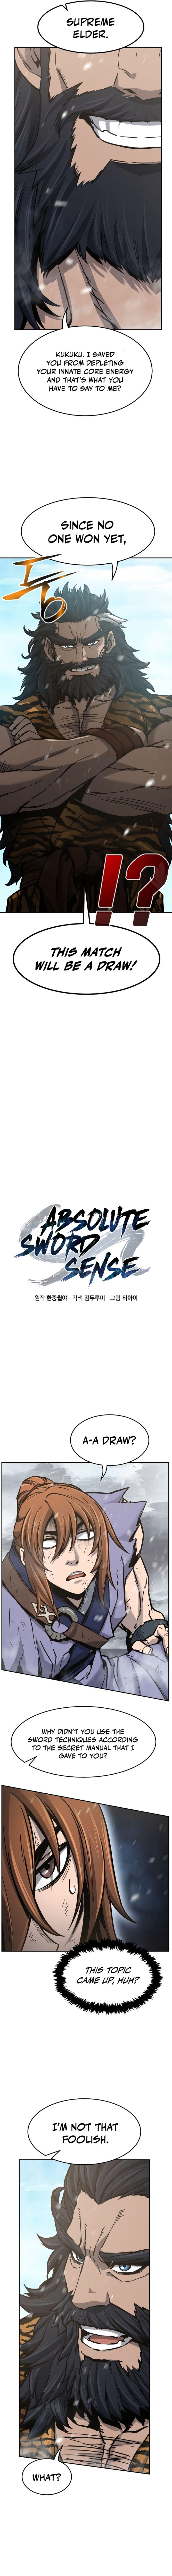 absolute_sword_sense_20_2